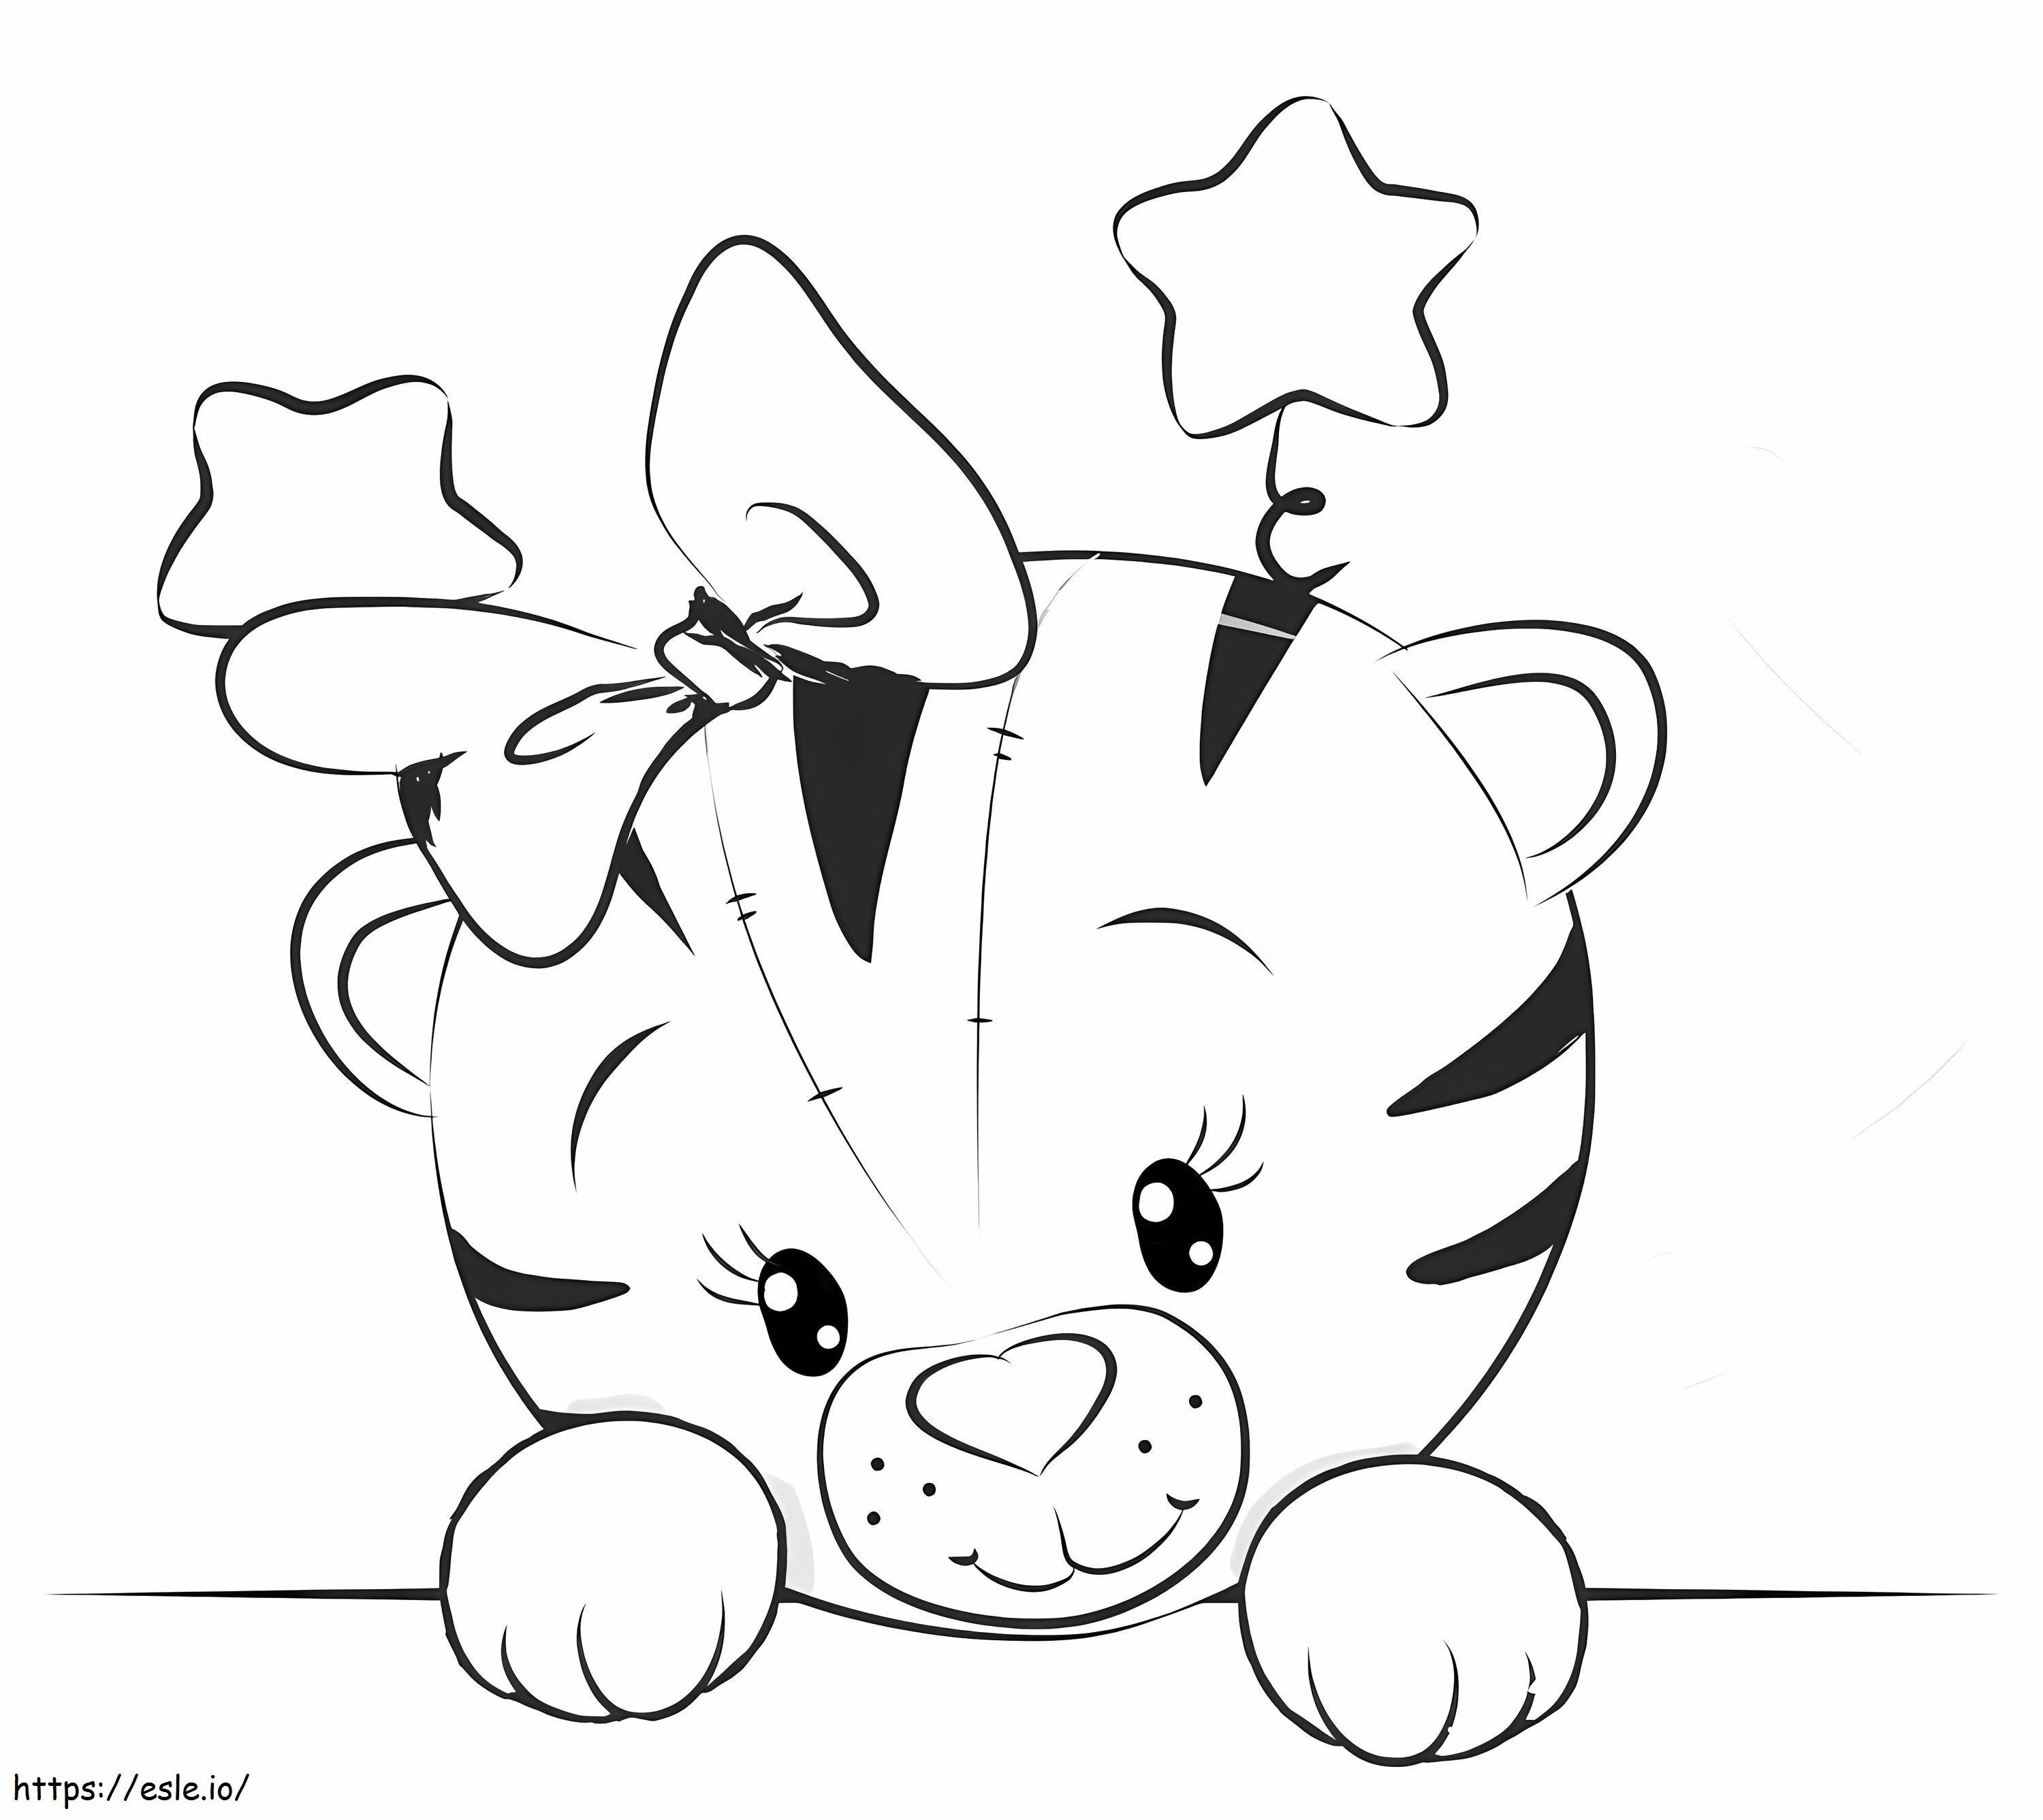  Indah Kartun Harimau A4 Gambar Mewarnai